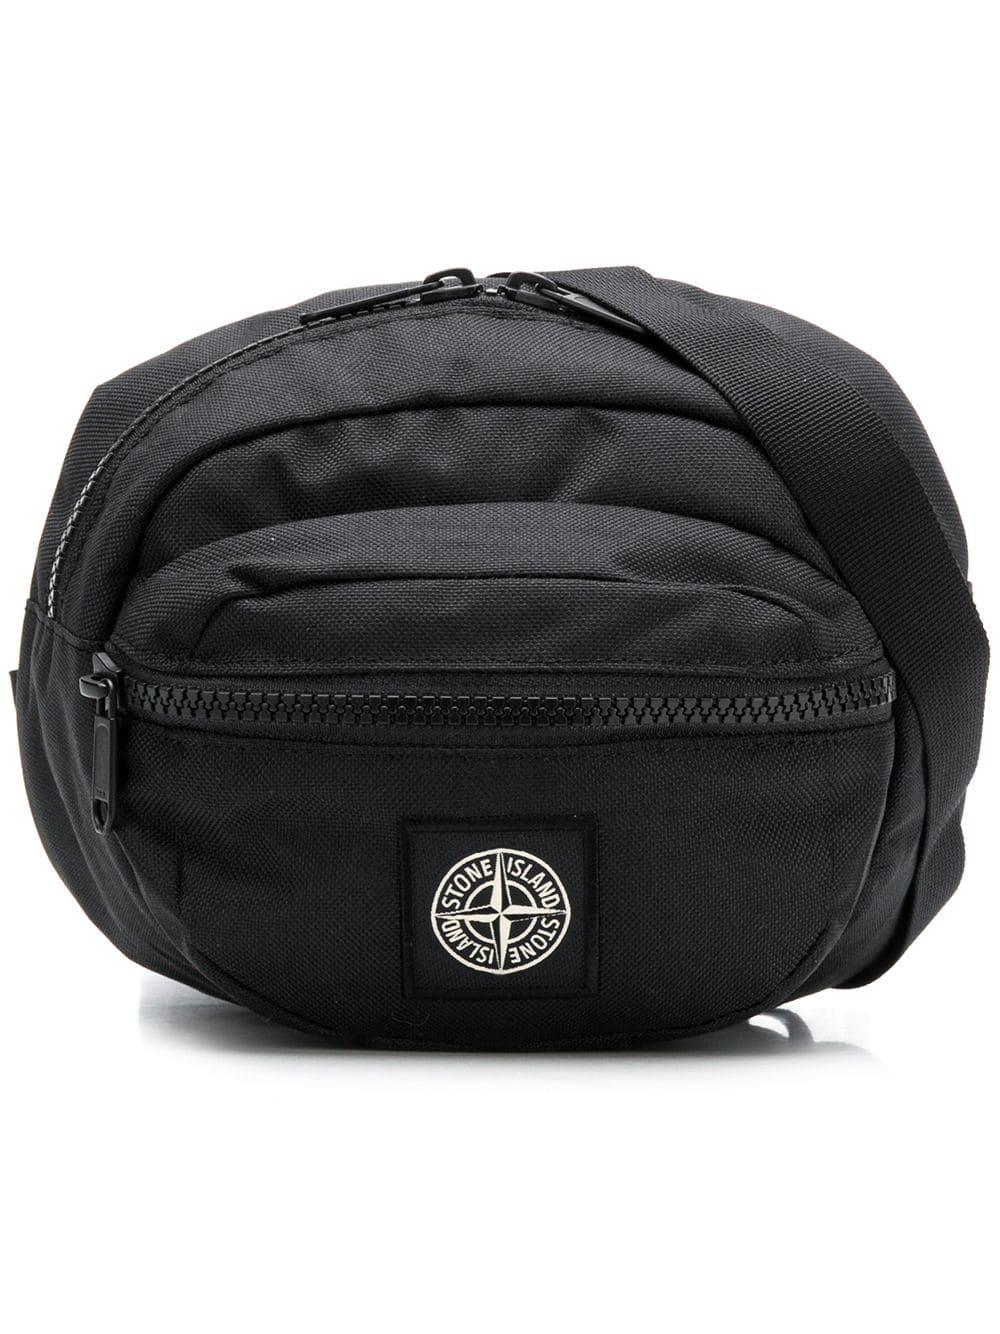 Stone Island 90771 Belt Bag in Black for Men | Lyst Canada